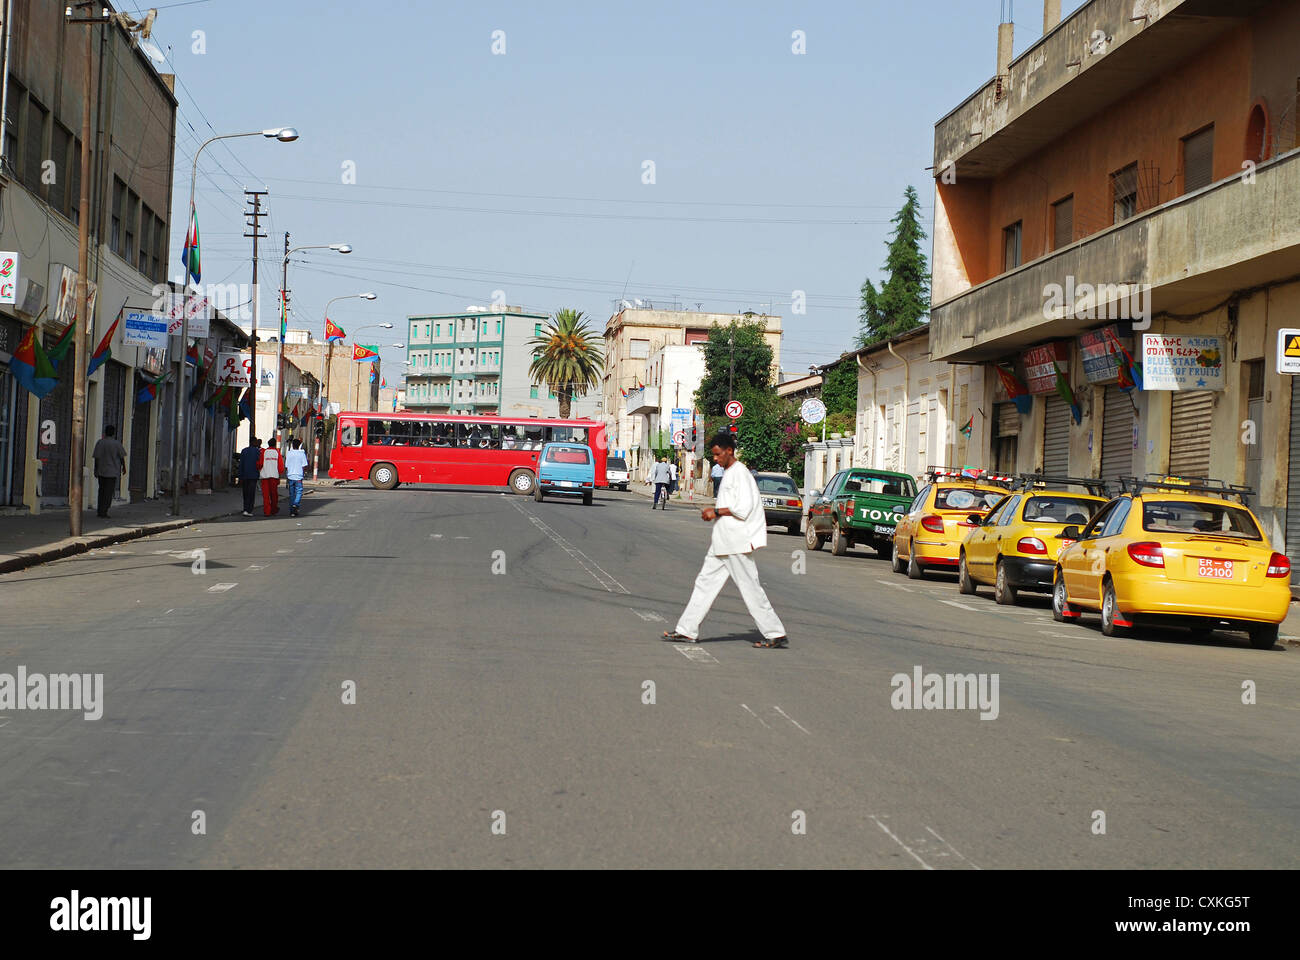 Eritrea, Asmara, man walking on the road by parked vehicles Stock Photo